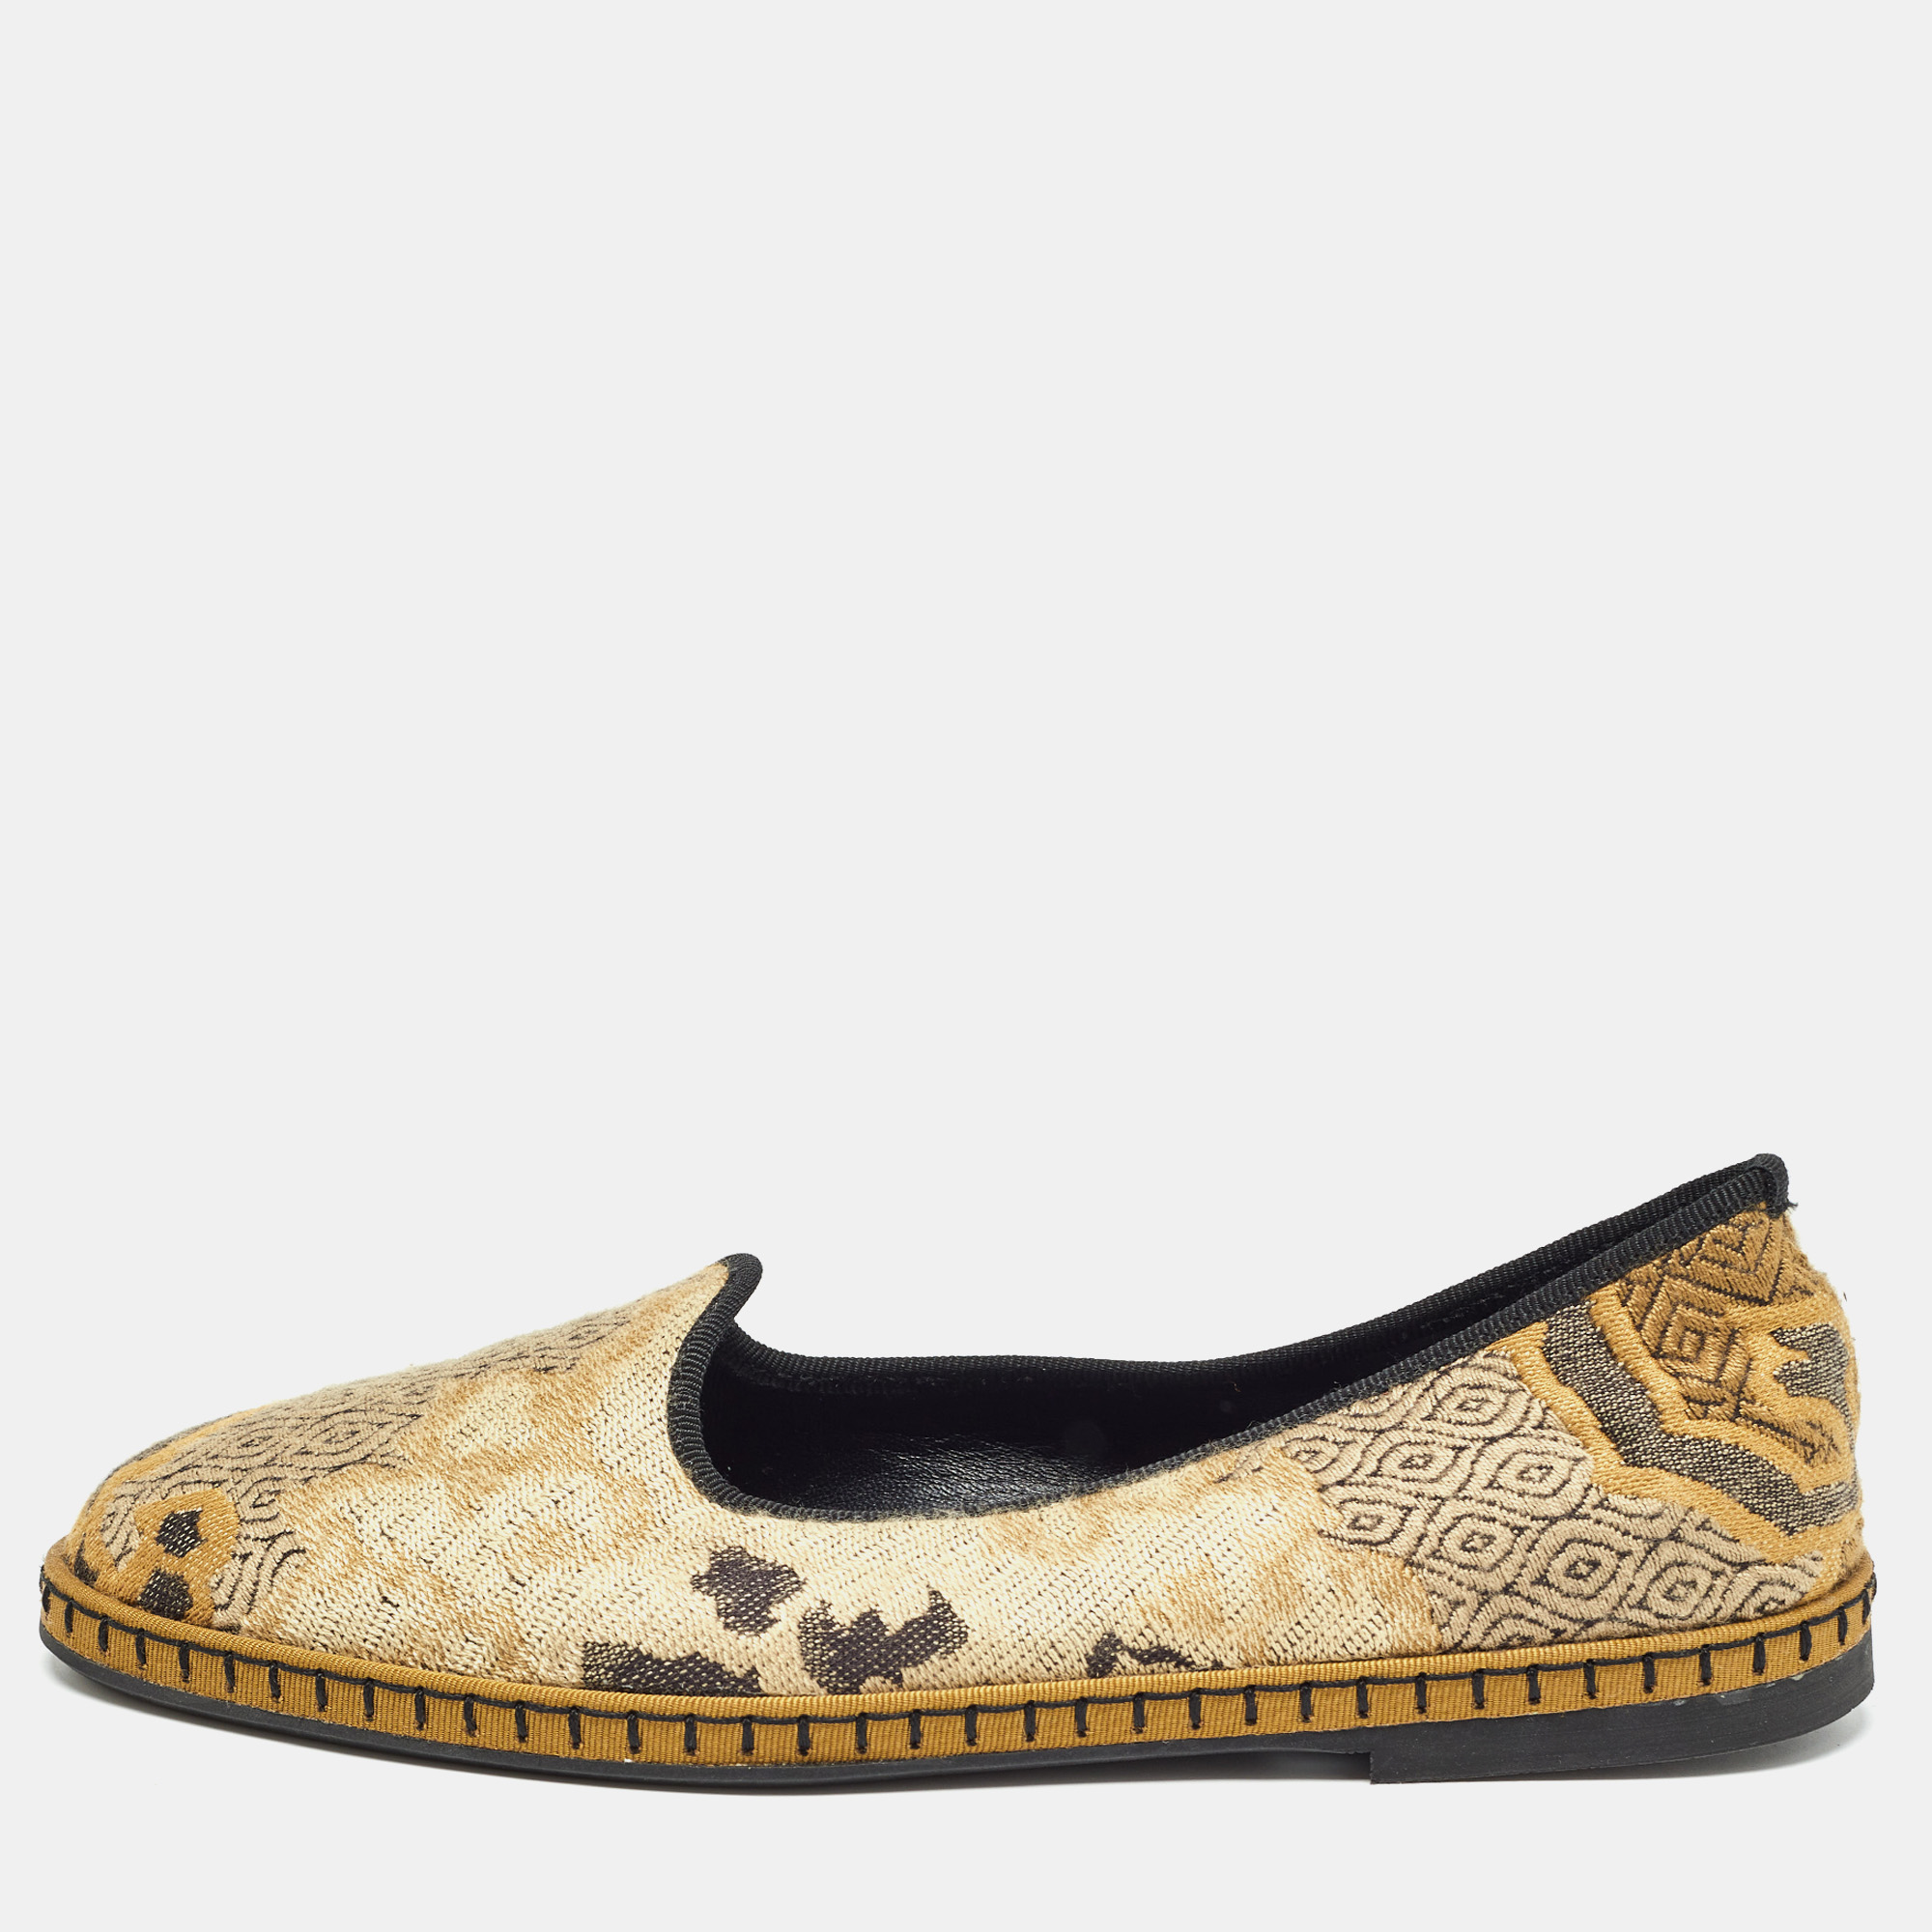 Etro gold/beige brocade canvas smoking slippers size 36.5